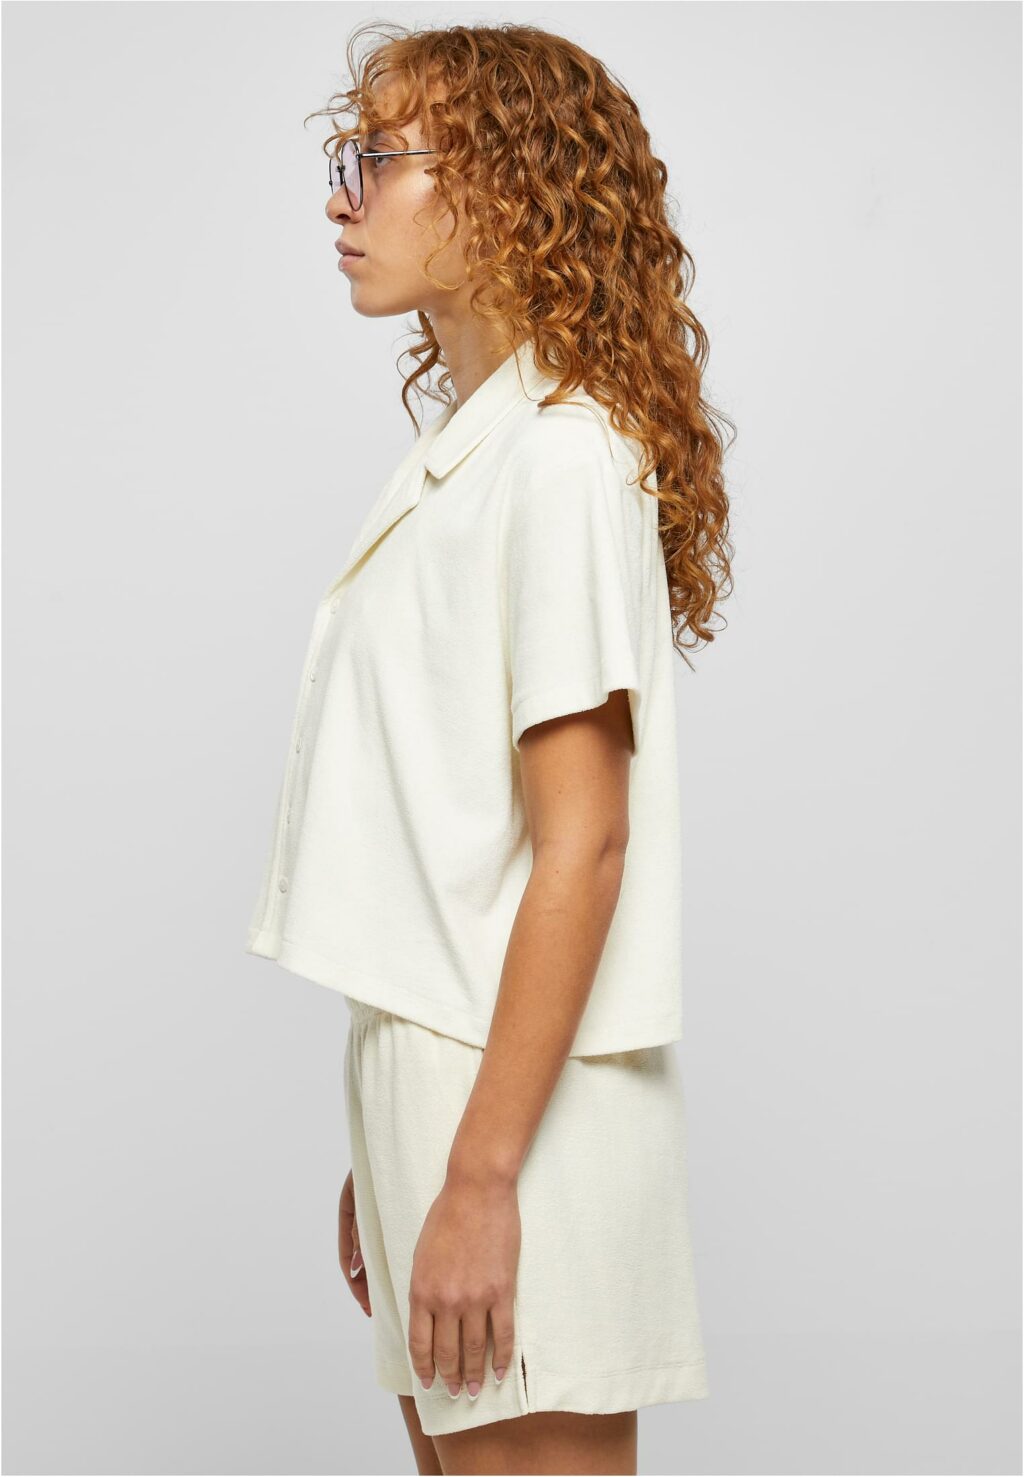 Urban Classics Ladies Towel Resort Shirt palewhite TB5981